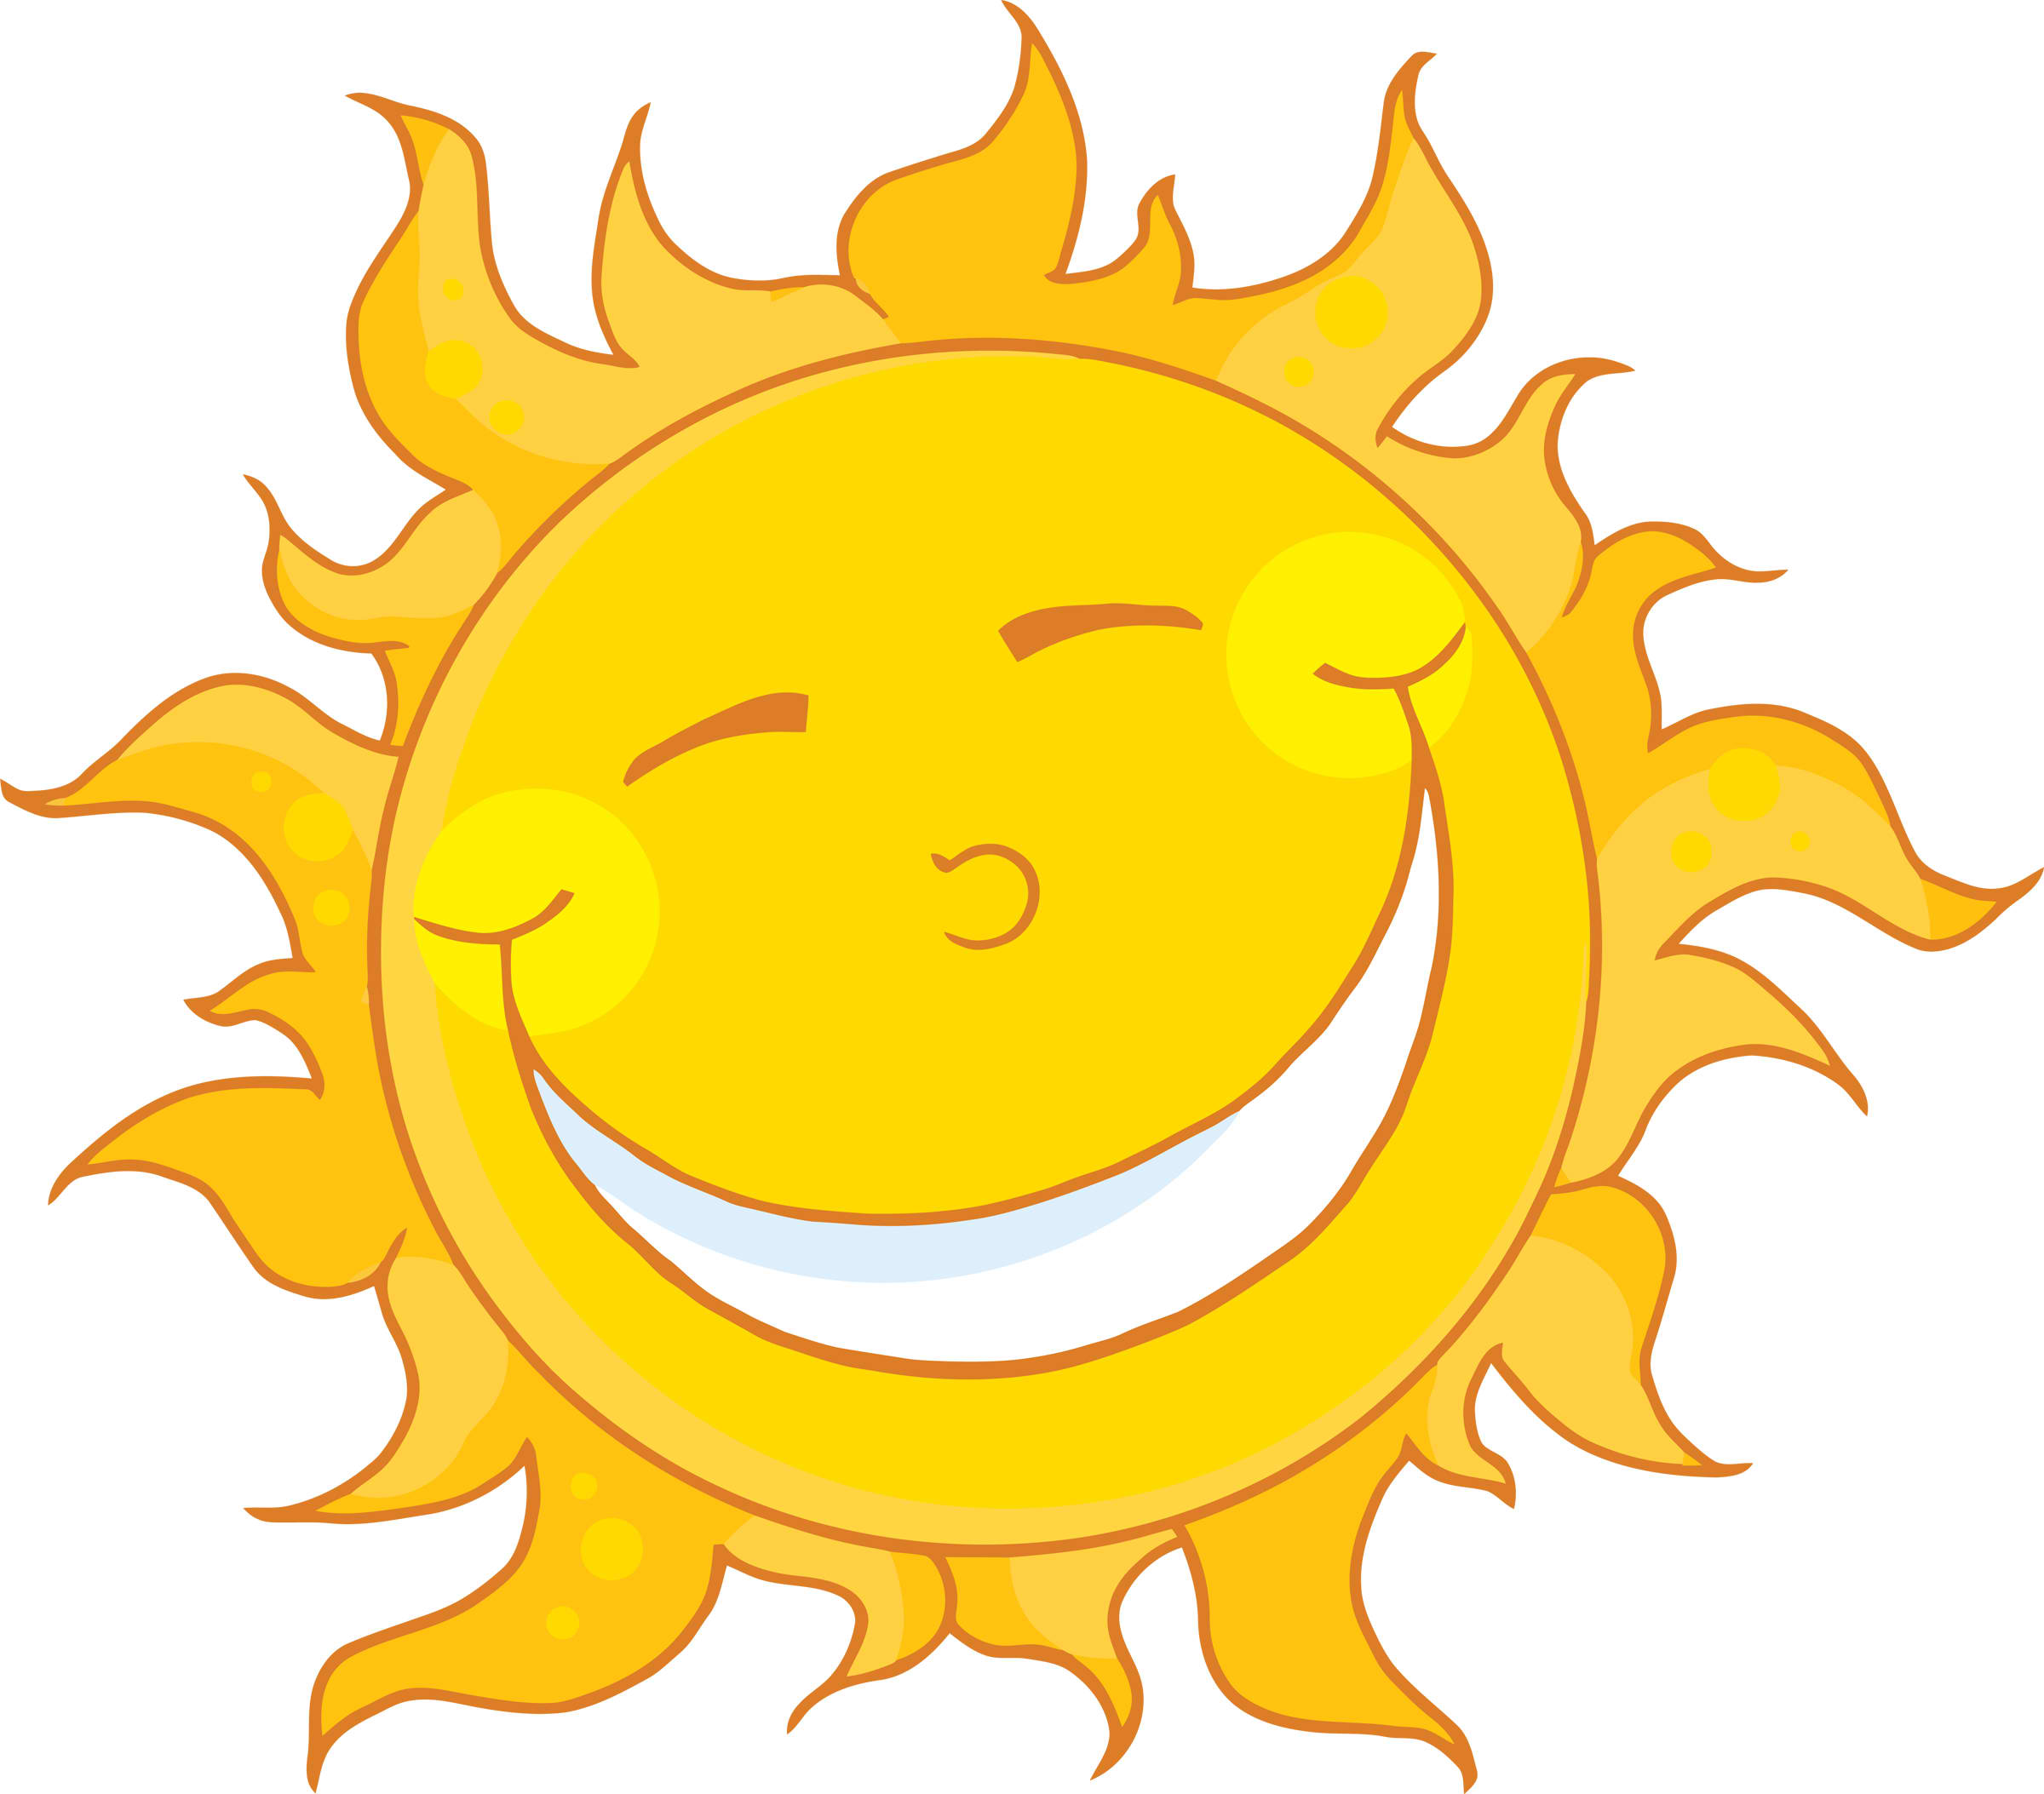 Happy Face Sun Clipart